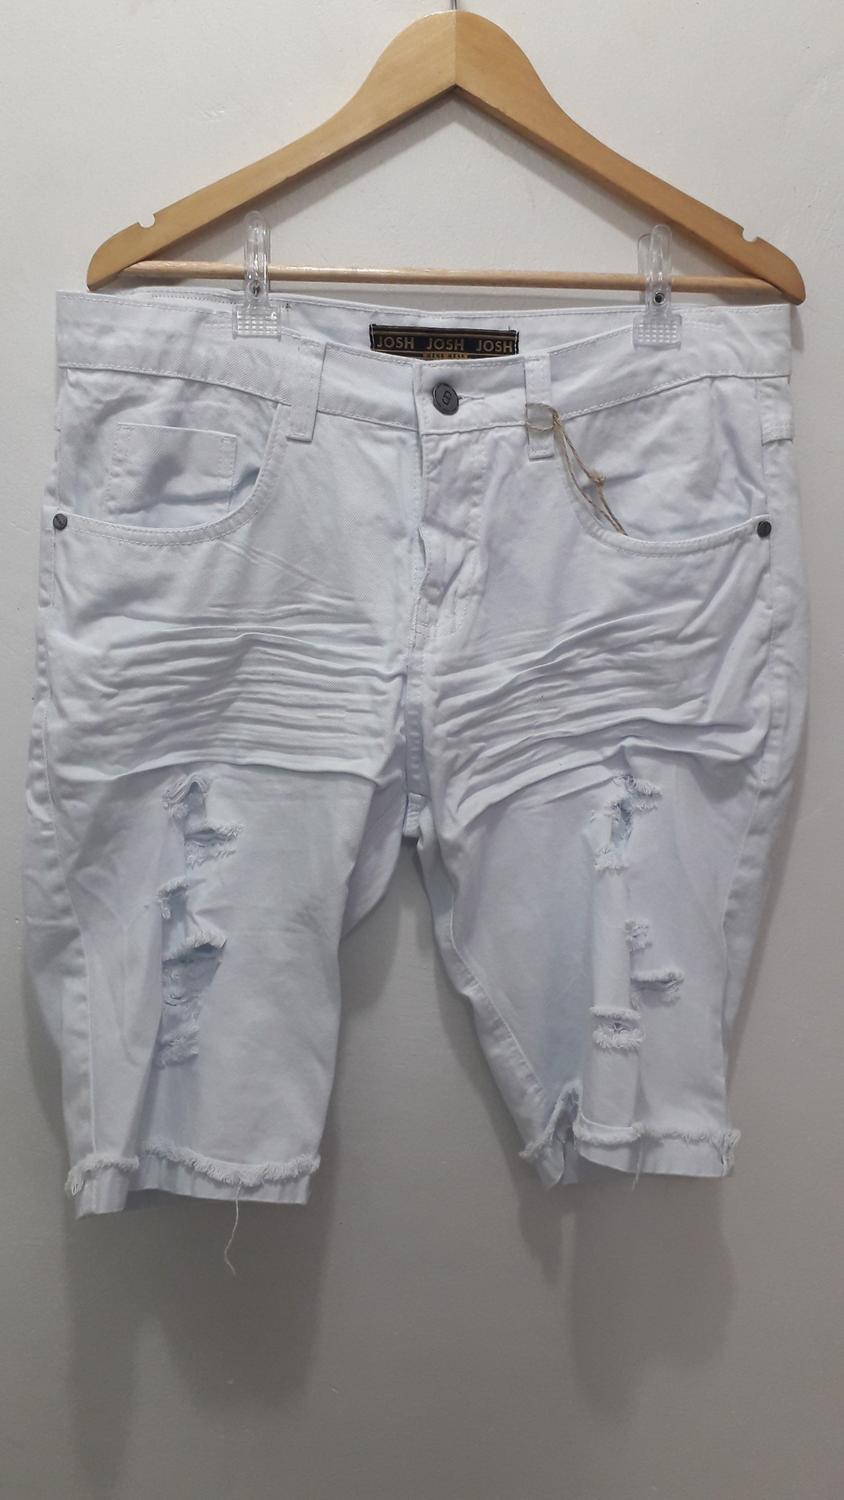 bermuda jeans branca